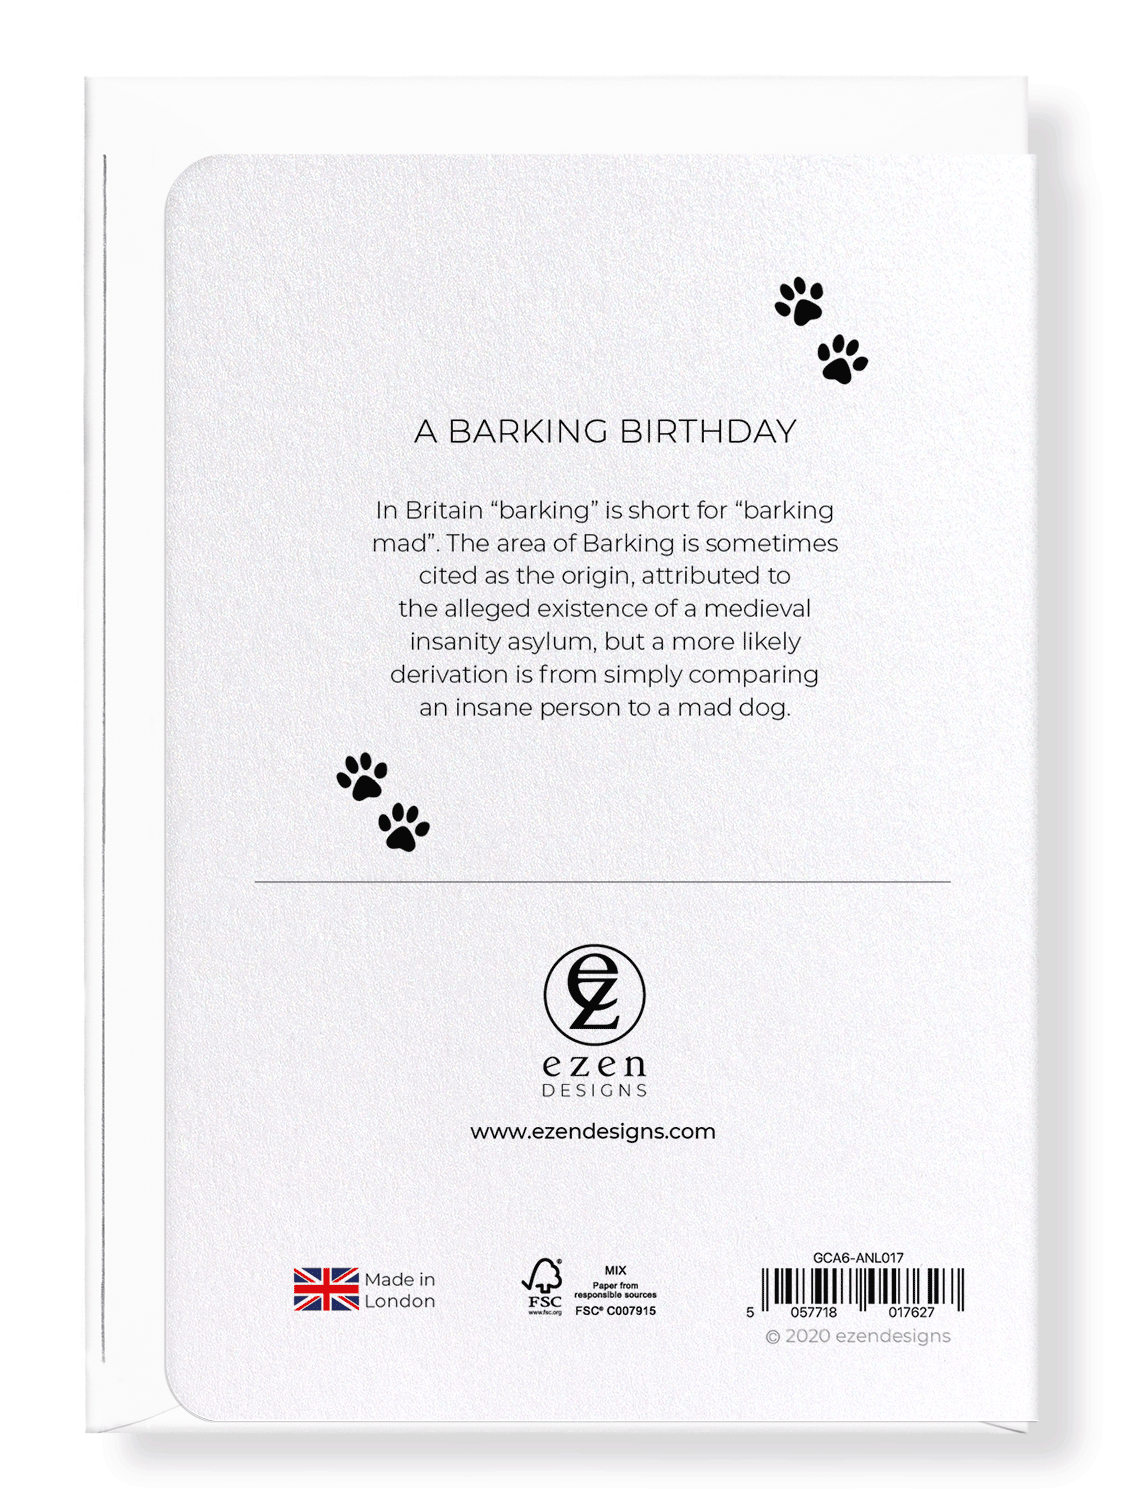 Ezen Designs - A barking birthday - Greeting Card - Back